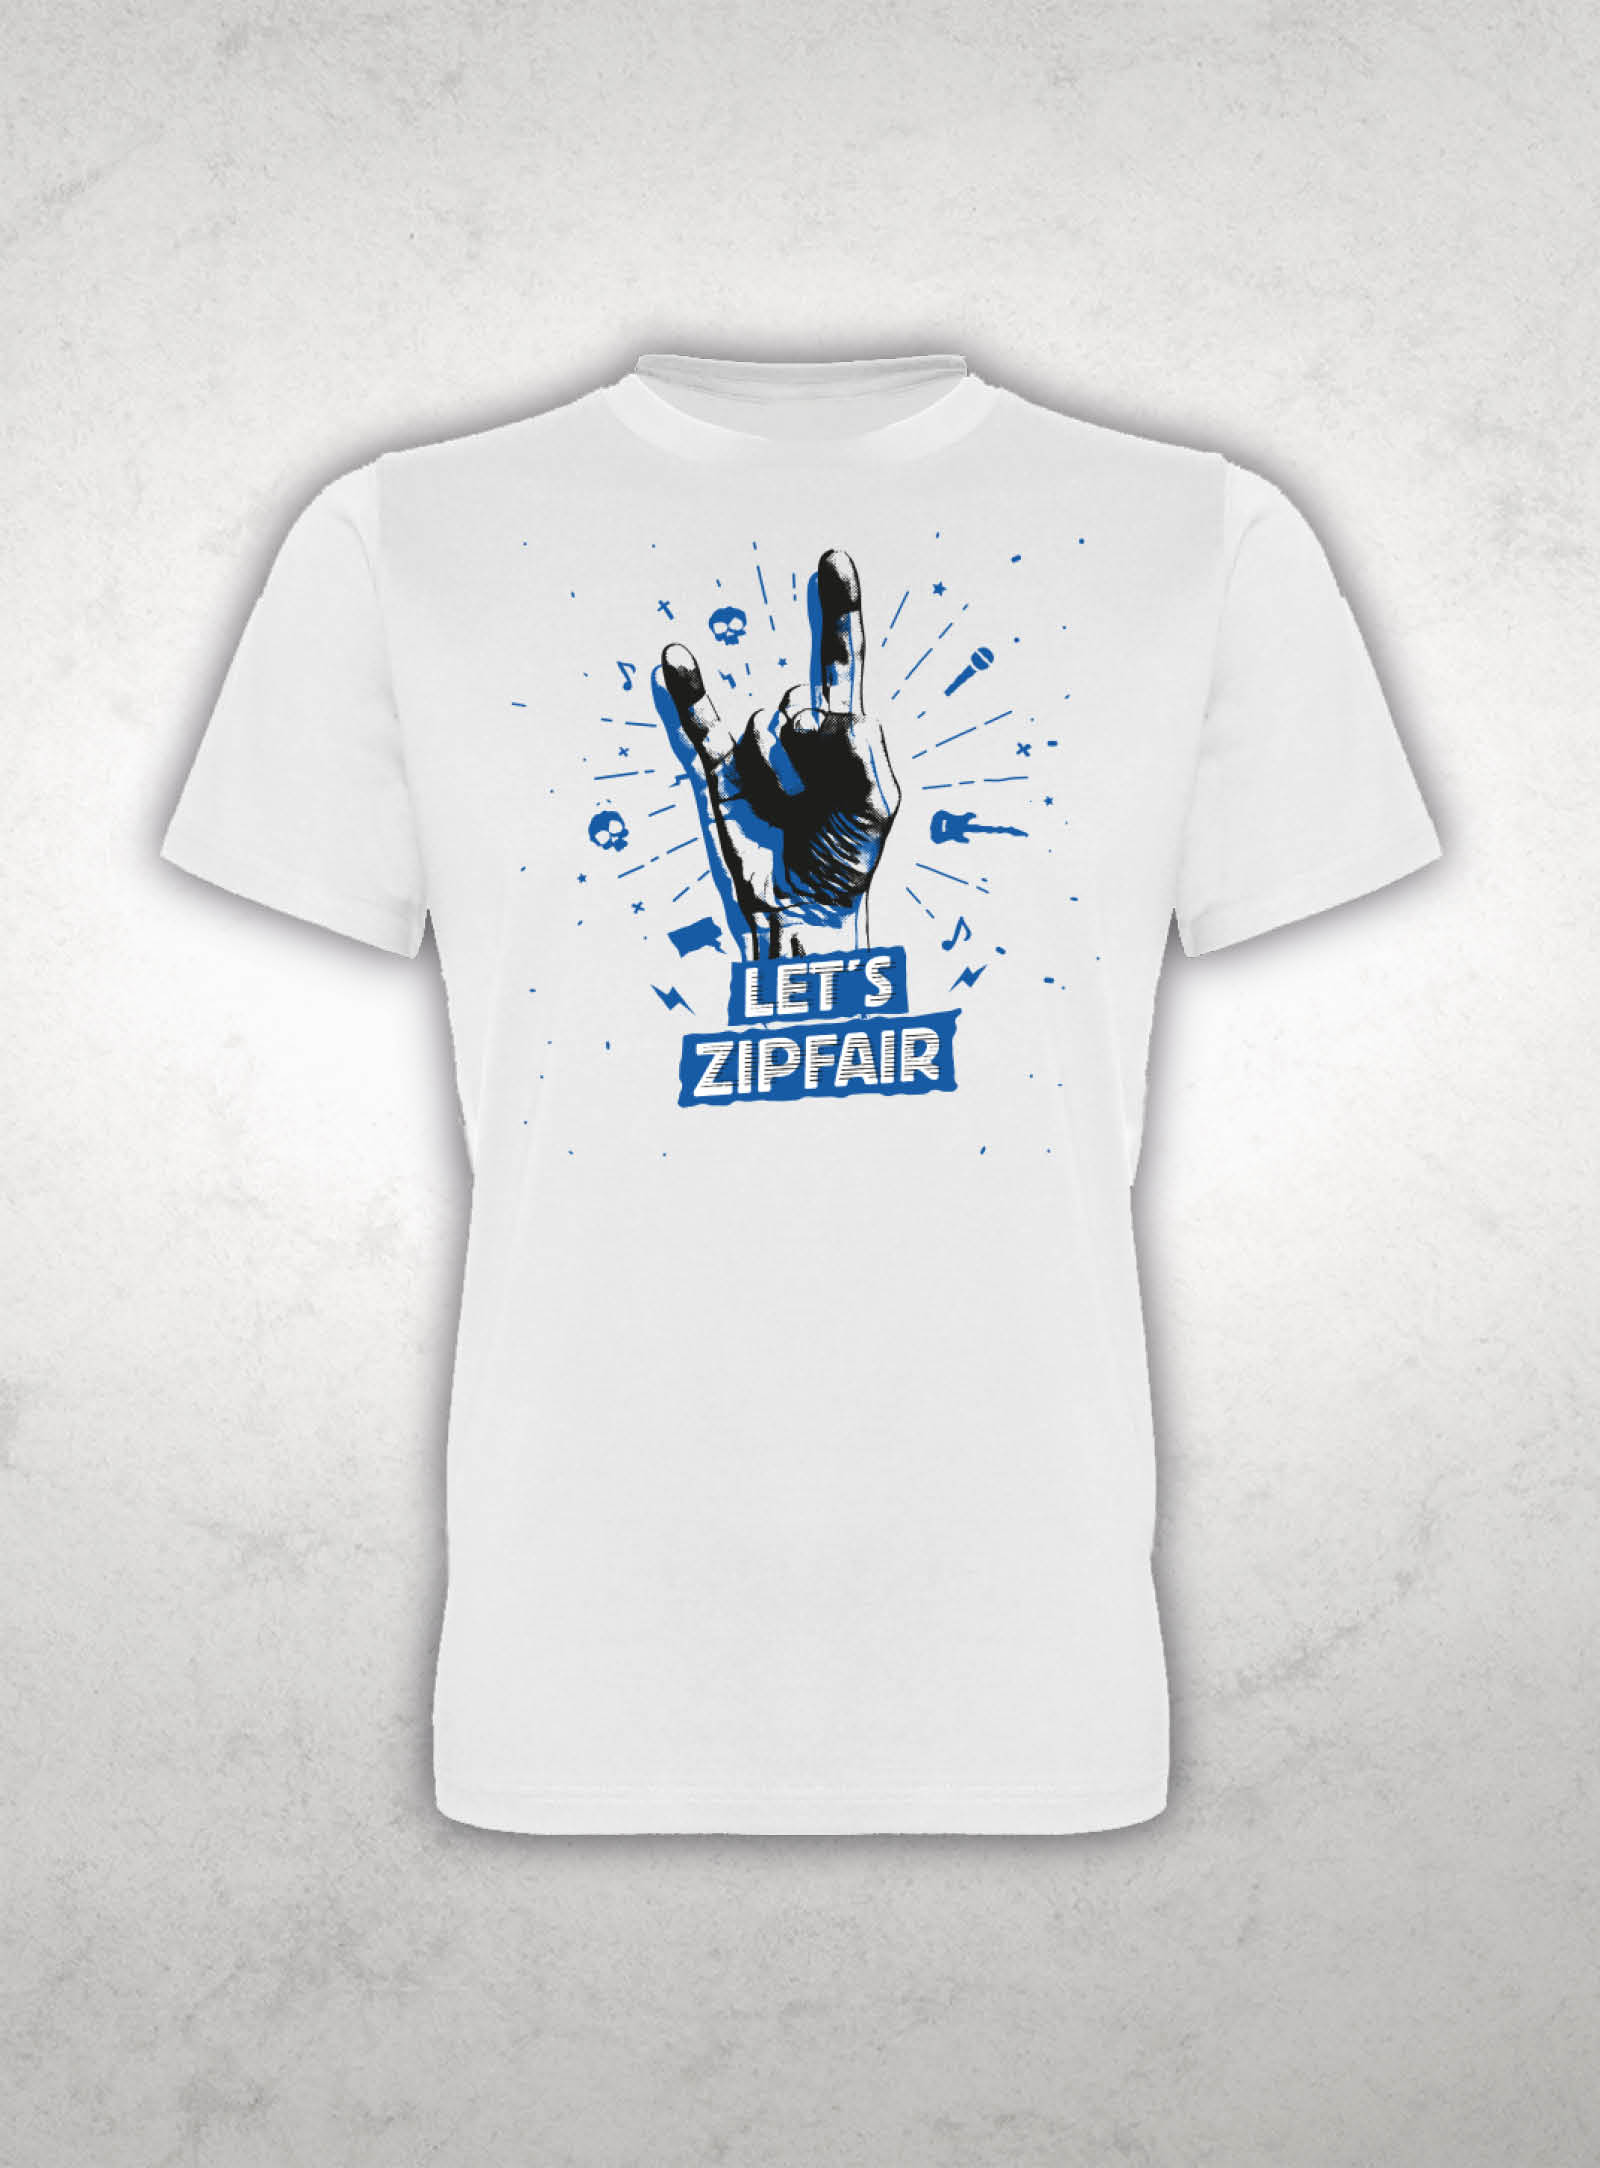 Let's ZipfAir Shirt unisex